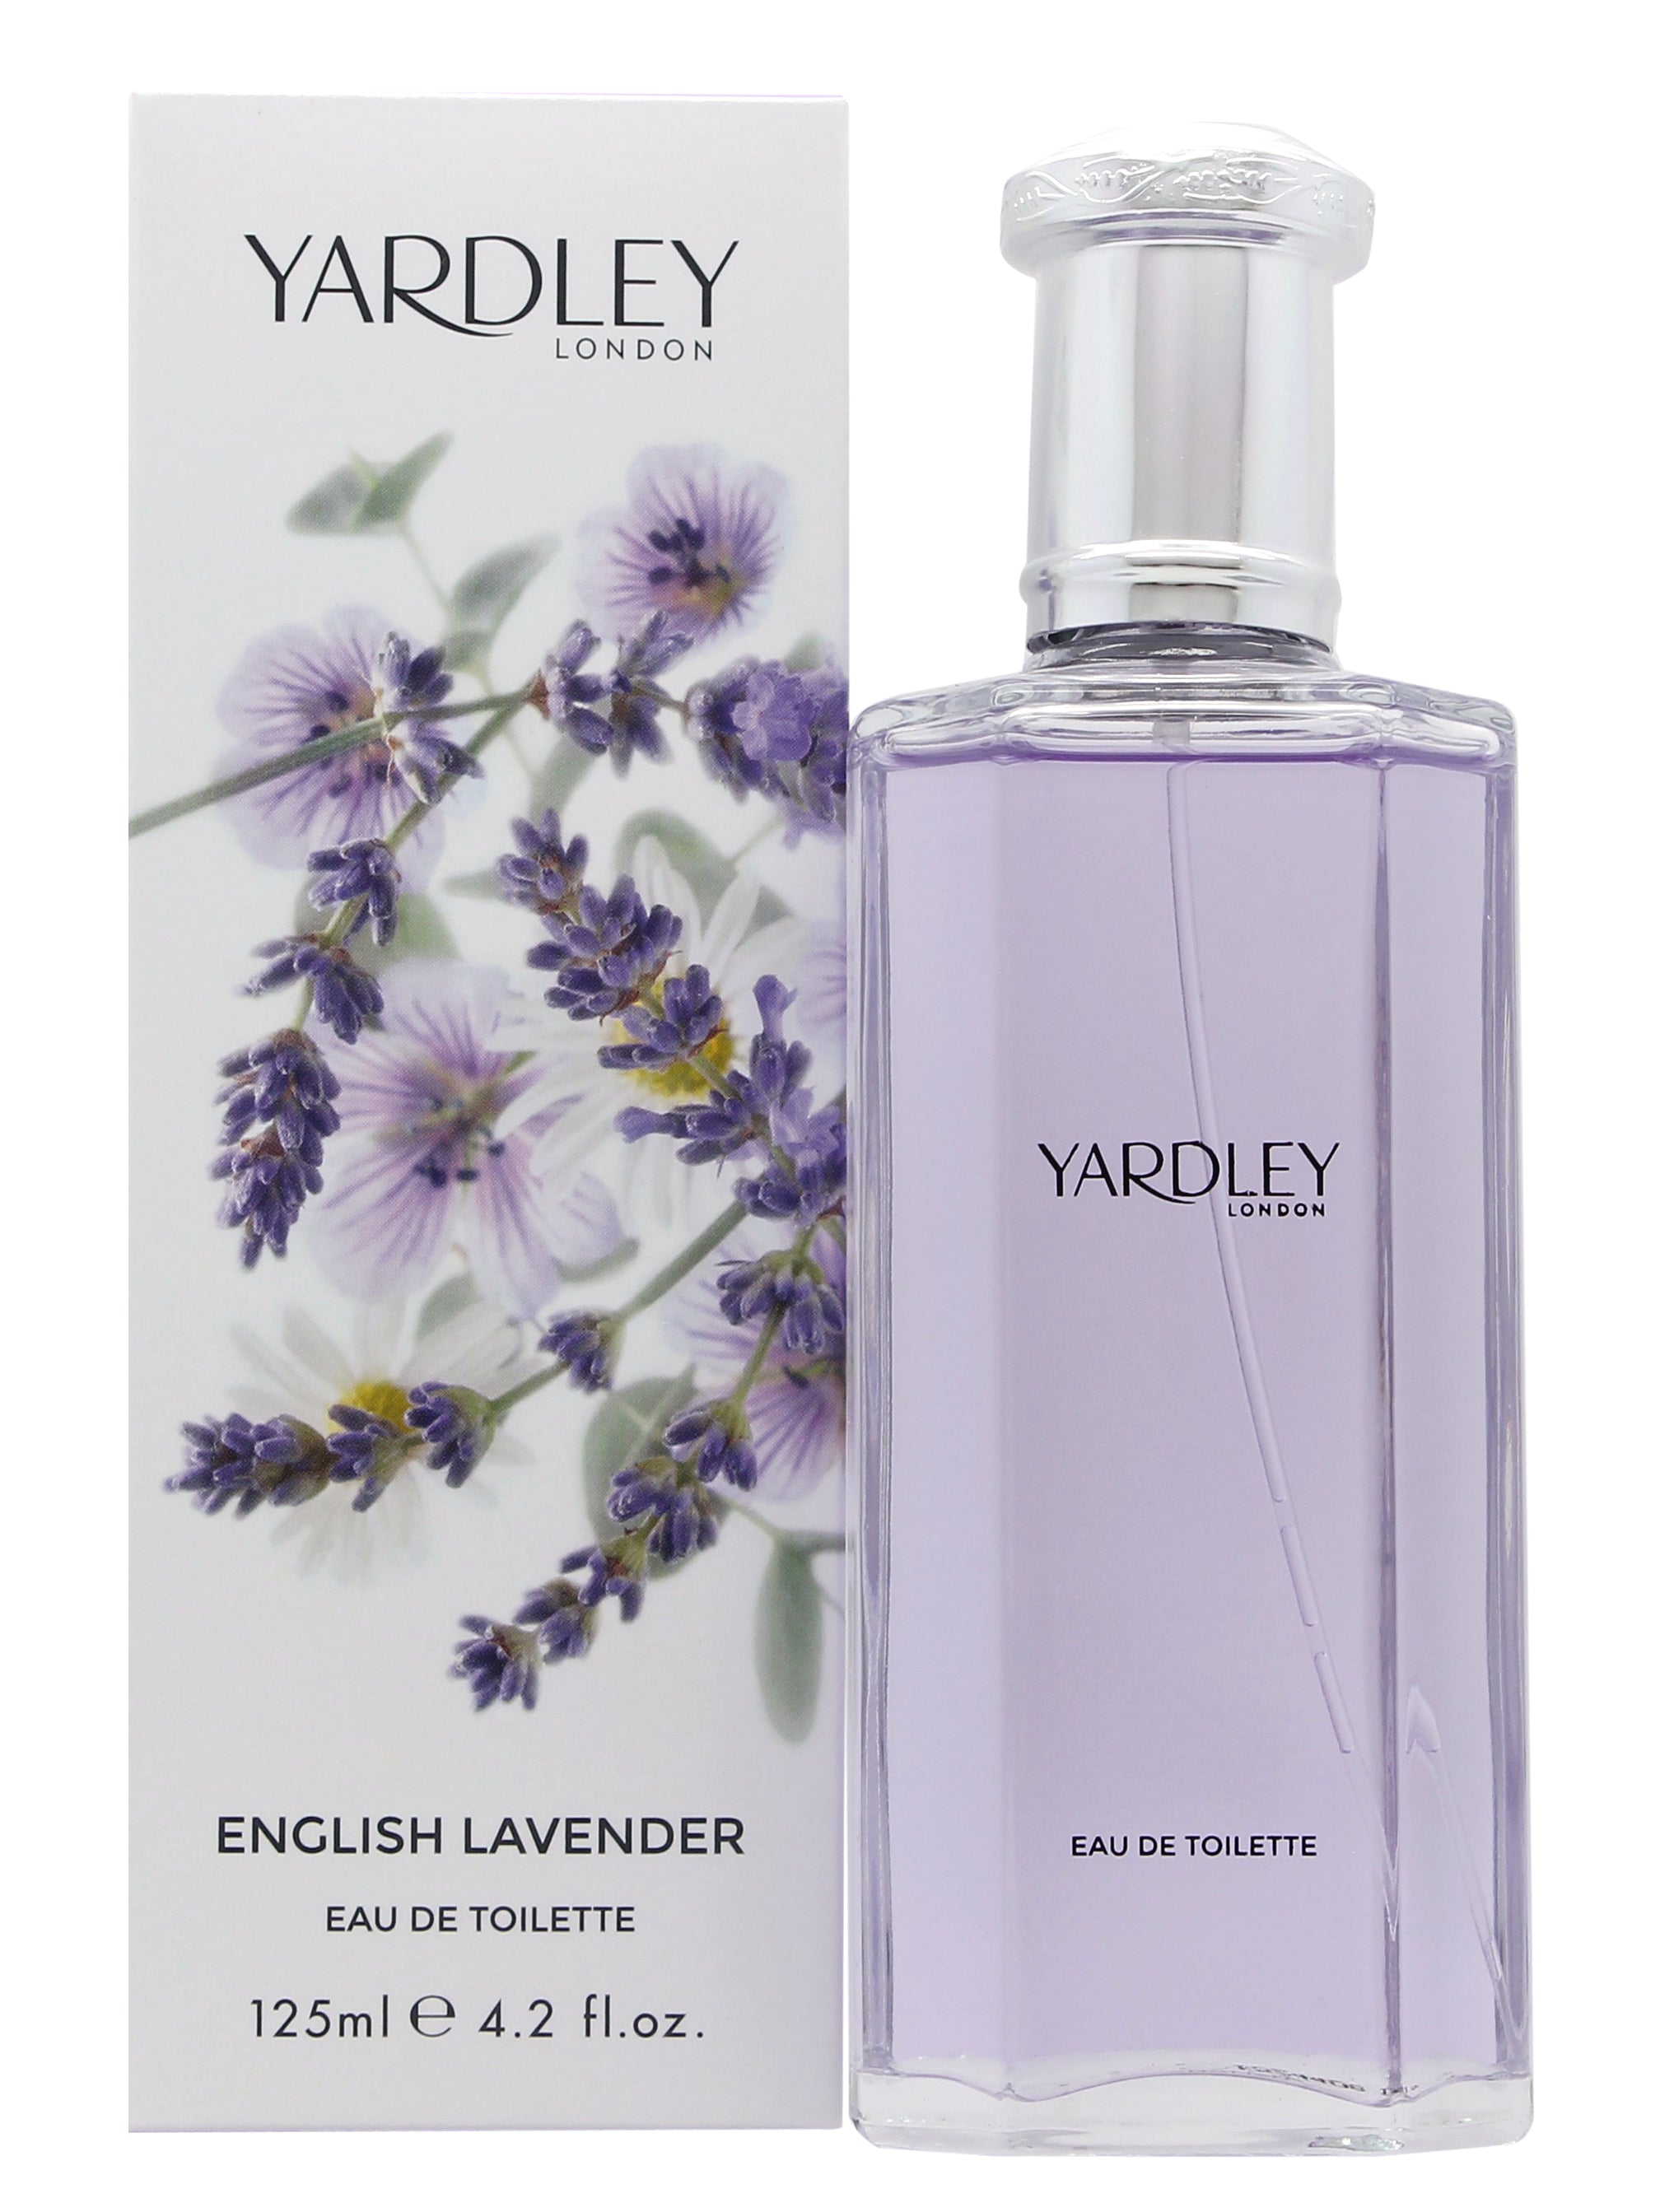 View Yardley English Lavender Eau de Toilette 125ml Spray information